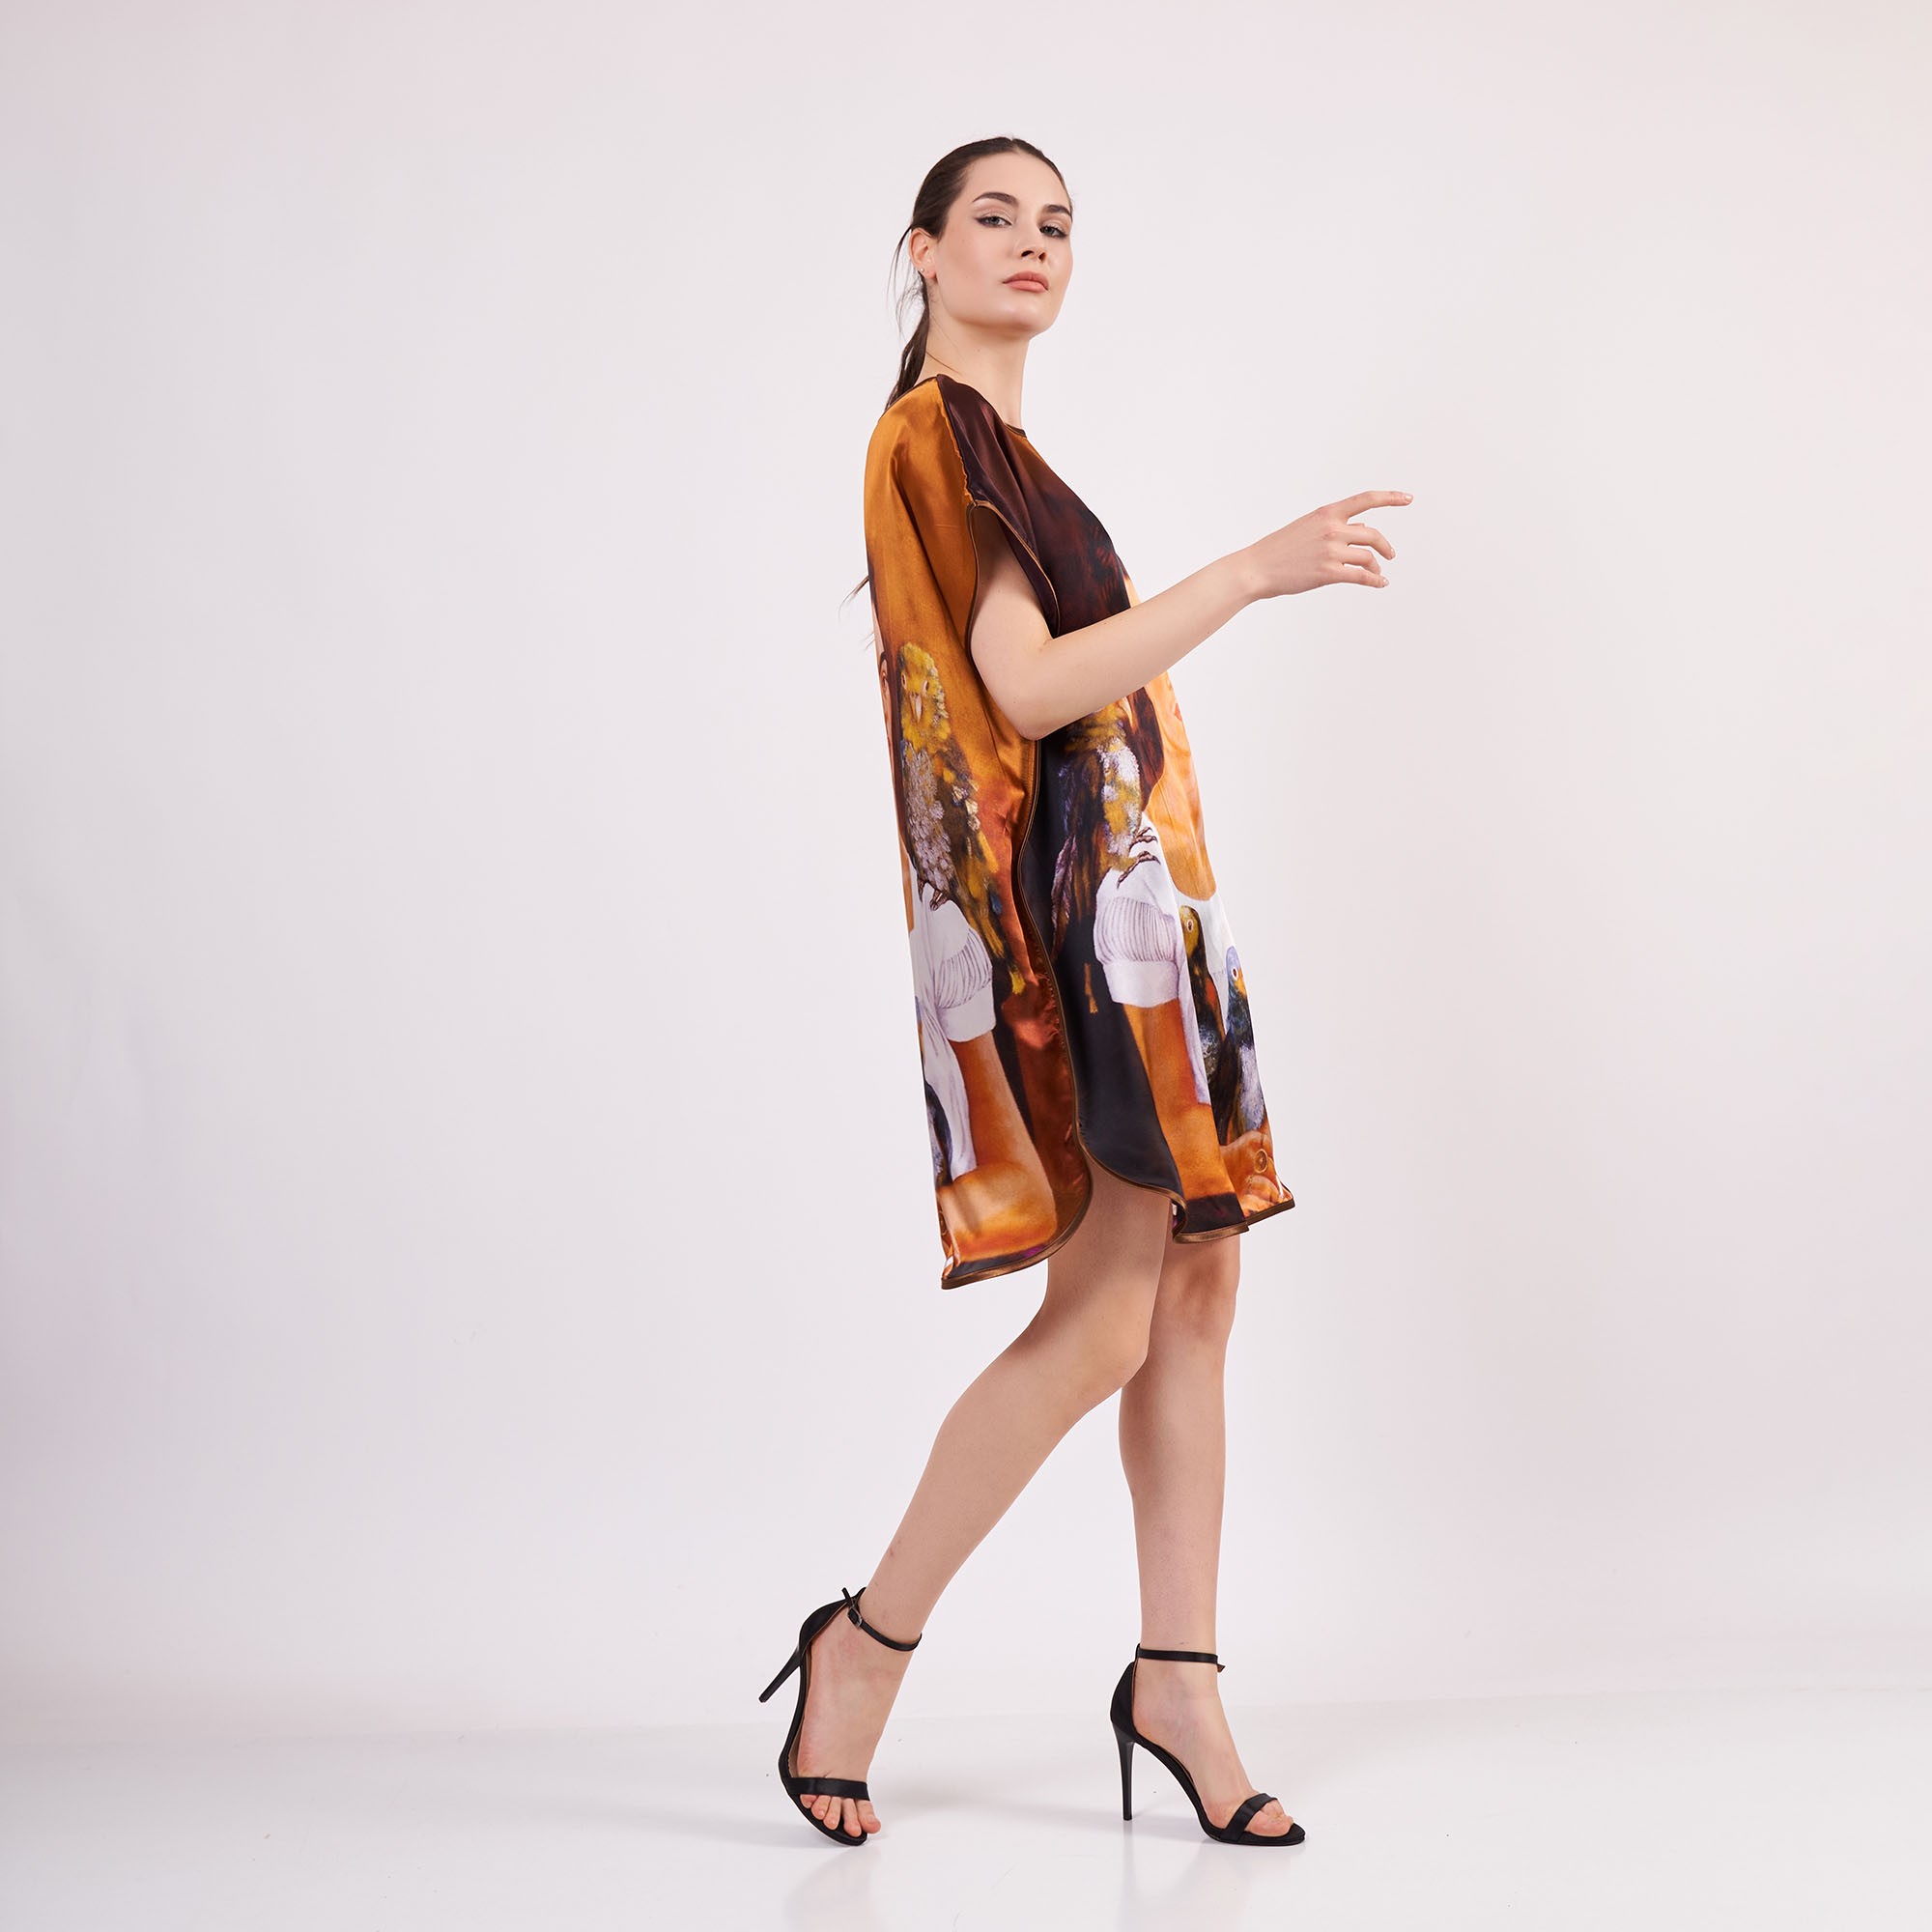 %100 Silk Plus Size Short Dress For Women | Oversized Short Kaftan Frida Kahlo 2 | Loose Fitting Dress